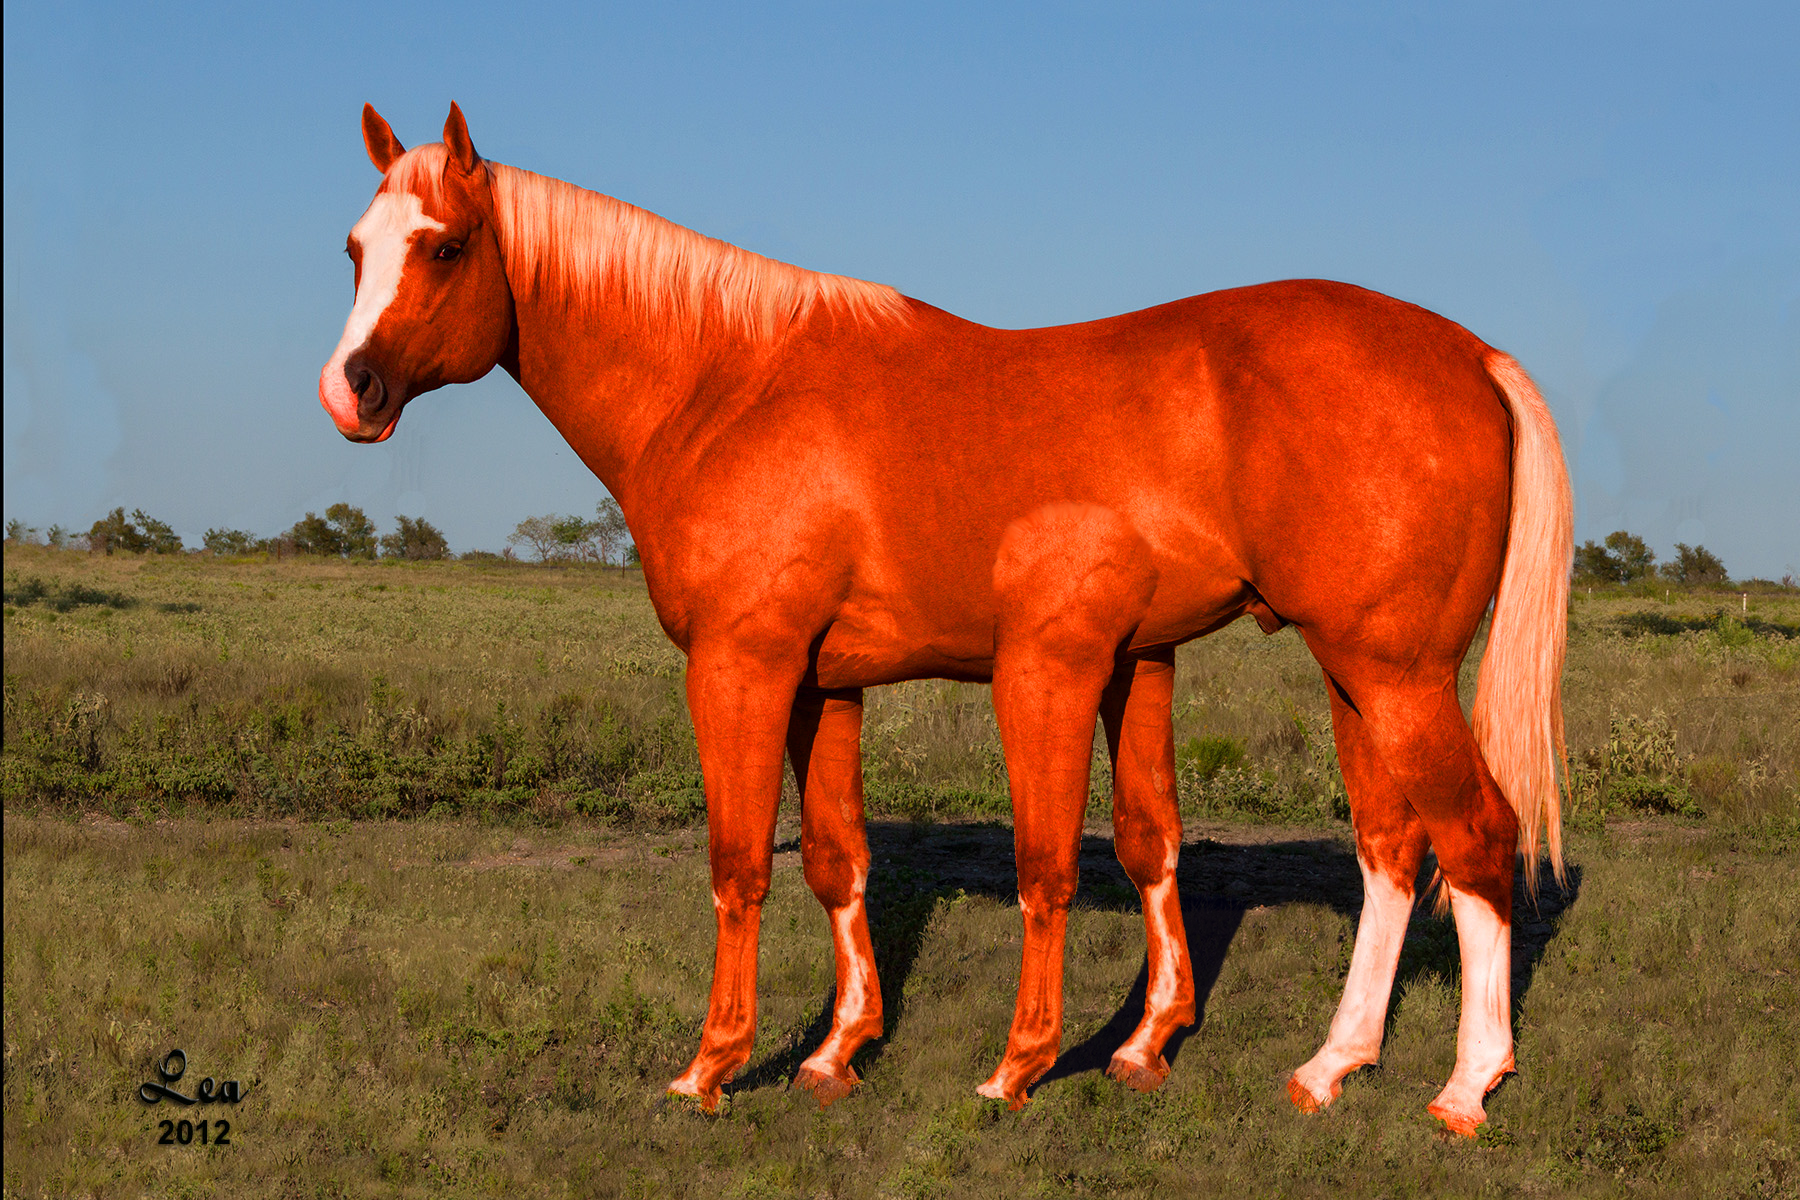 FTL: Six-legged horse-like animal by Twilightwindwaker777 on DeviantArt